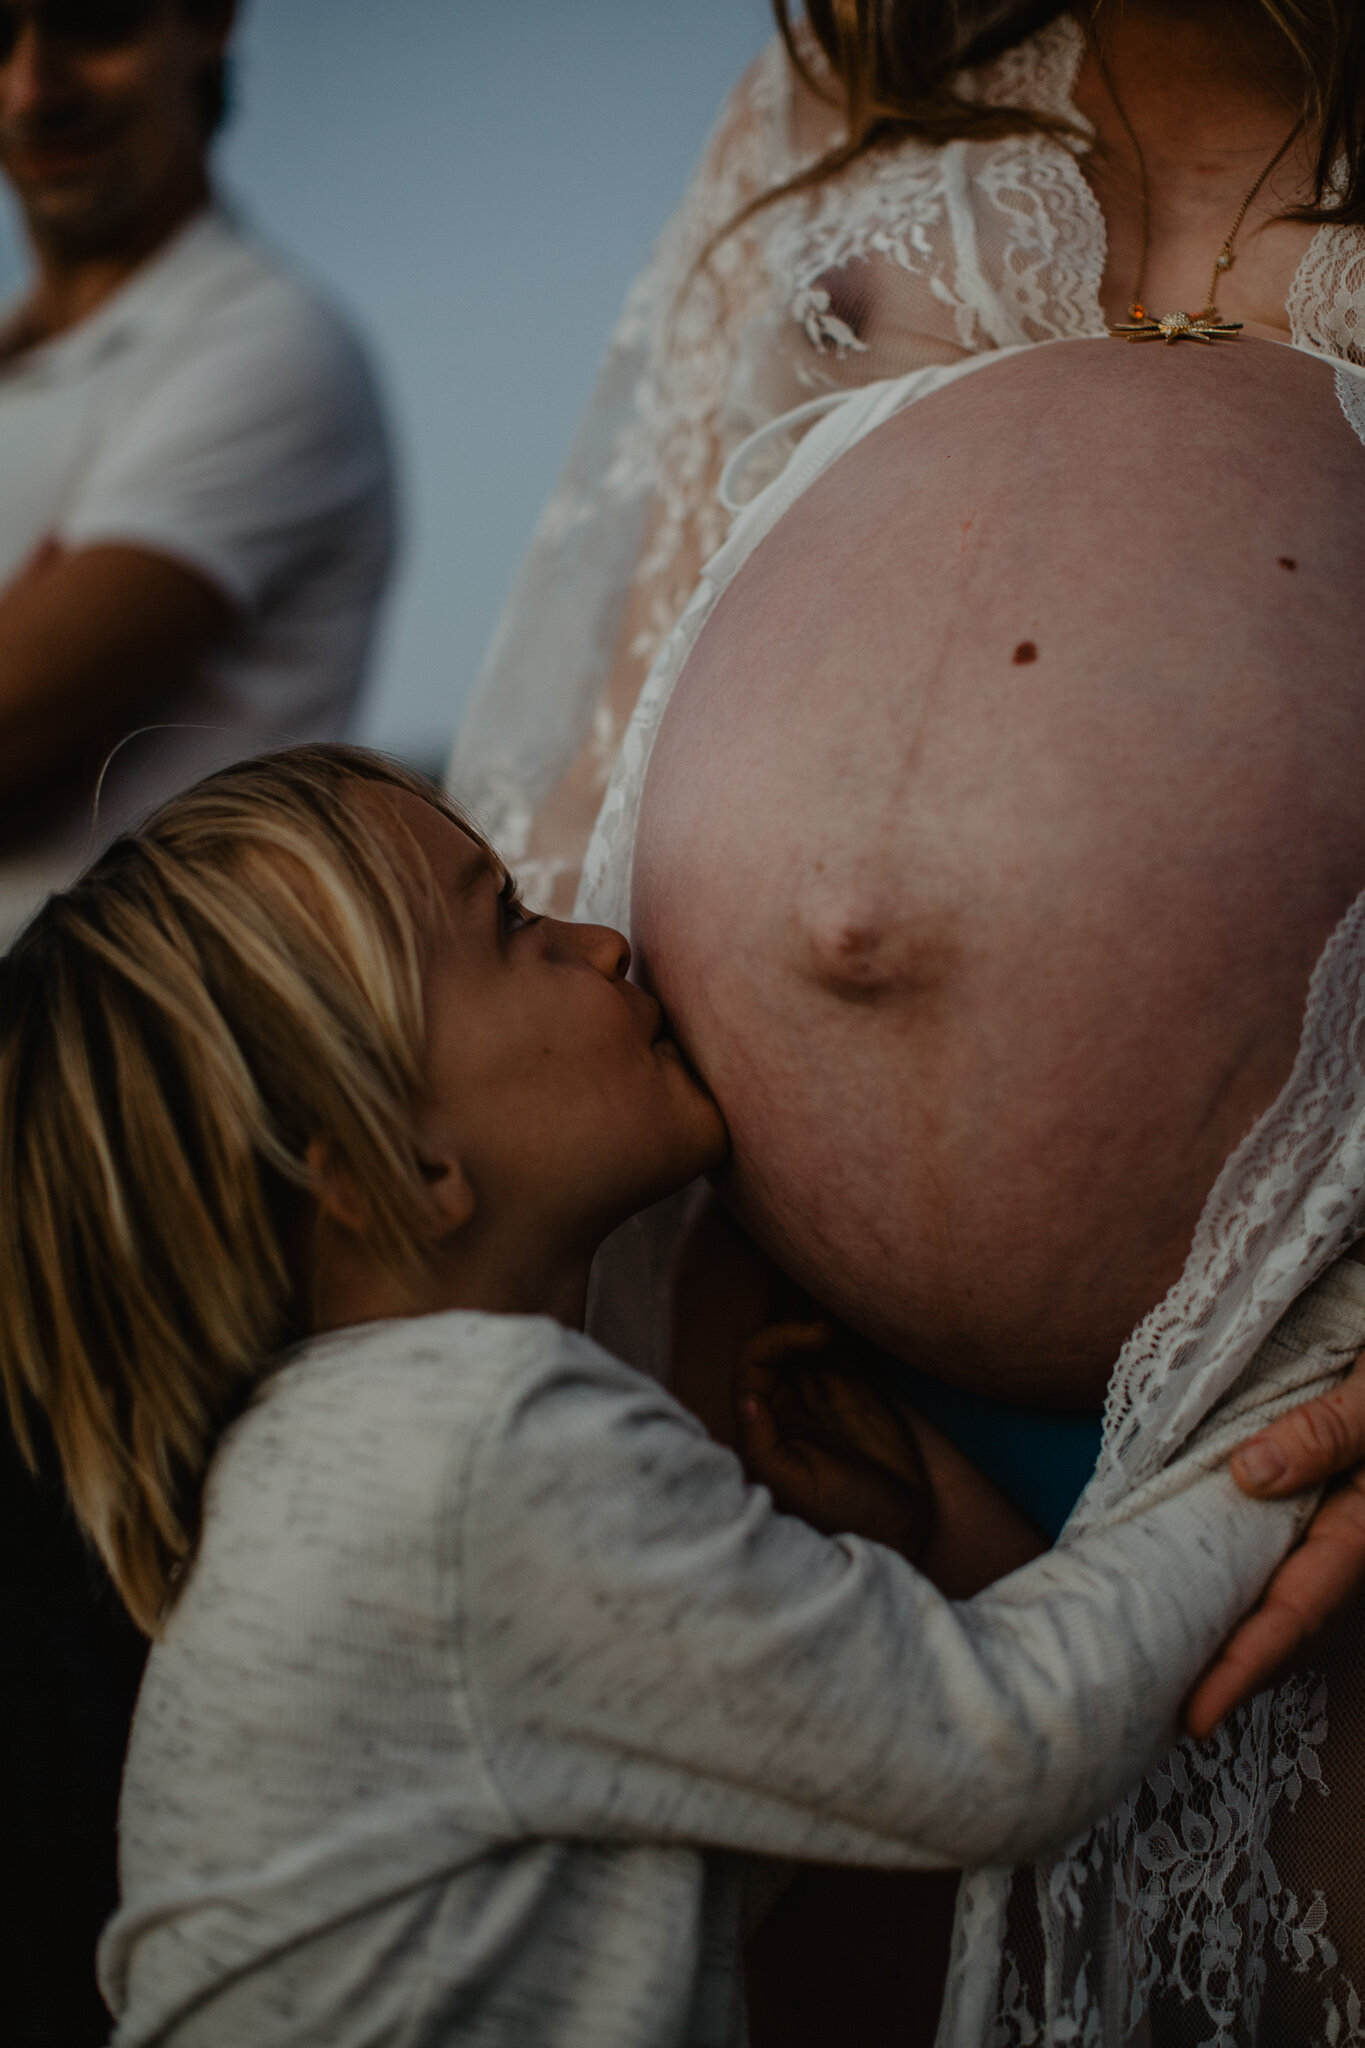 Kid kissing mom's pregnant stomach